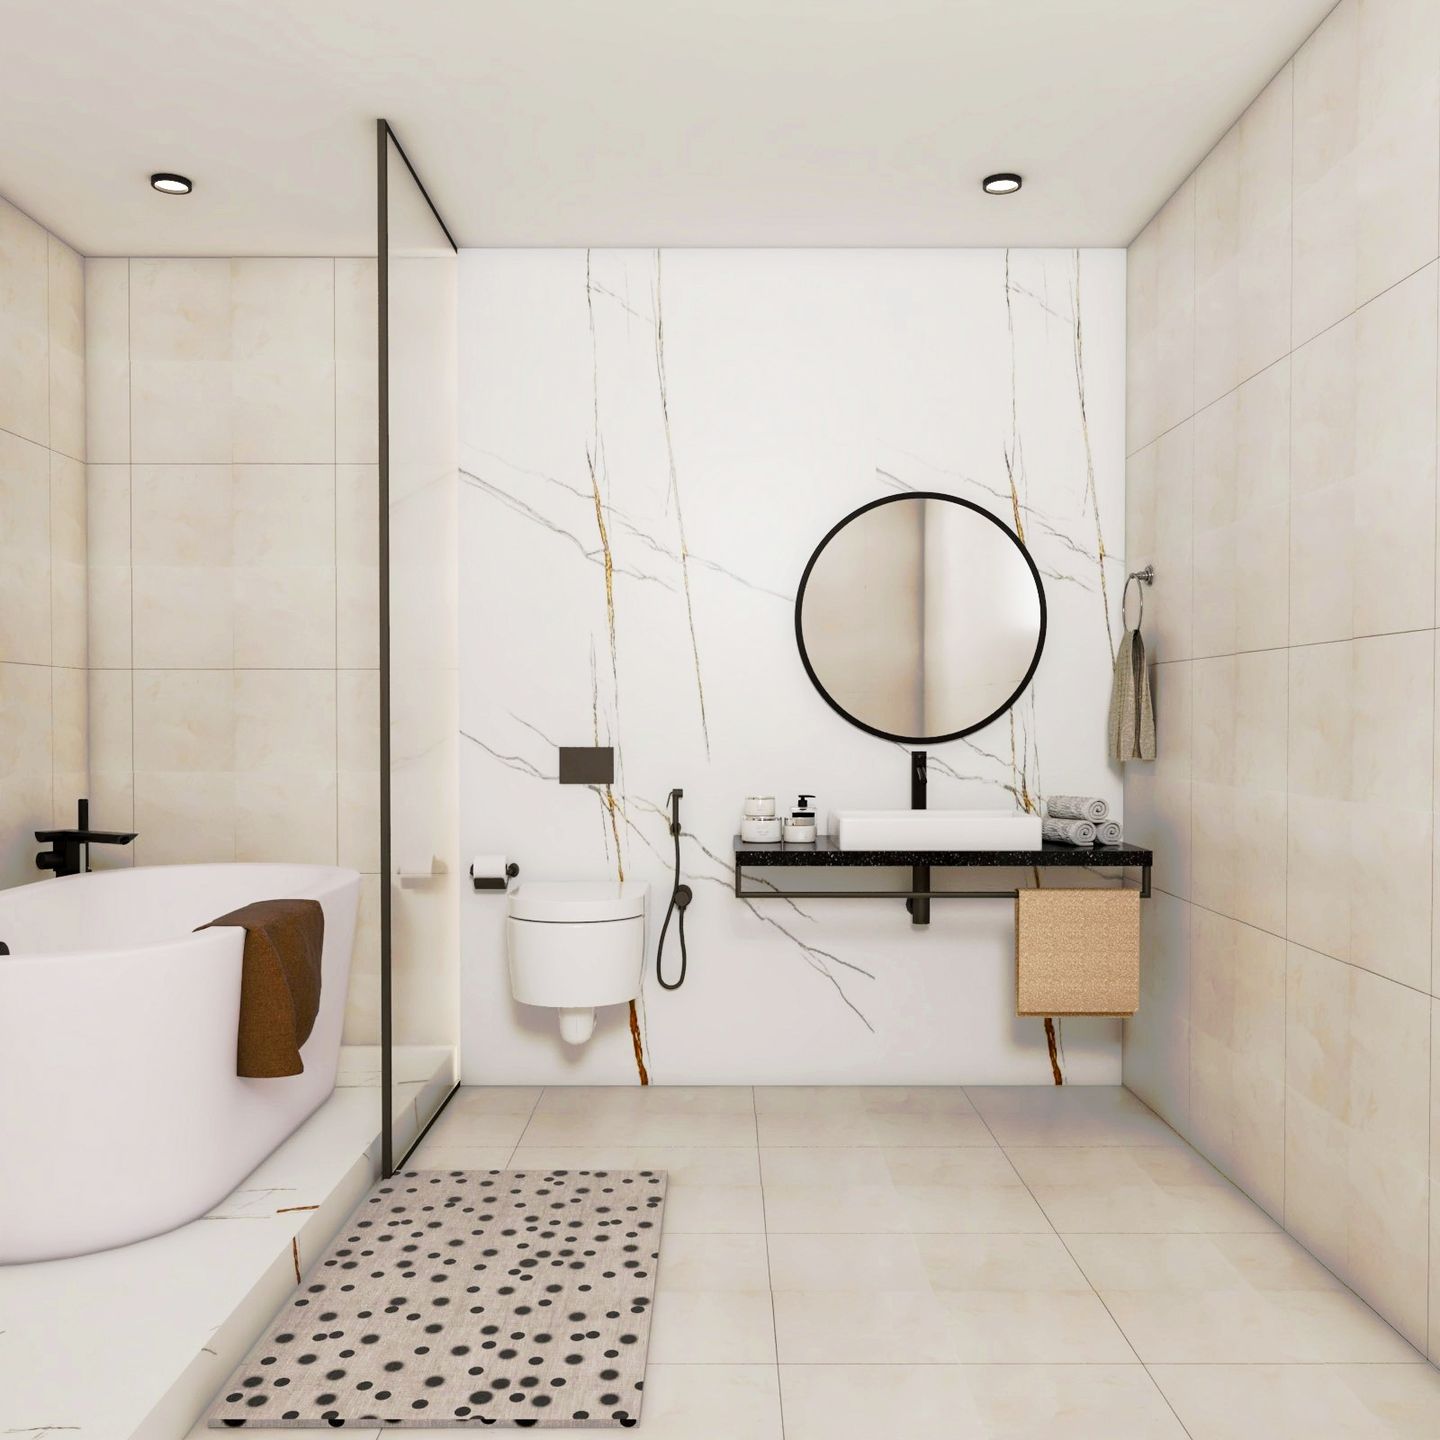 White And Cream Bathroom Design With Round Mirror - Livspace